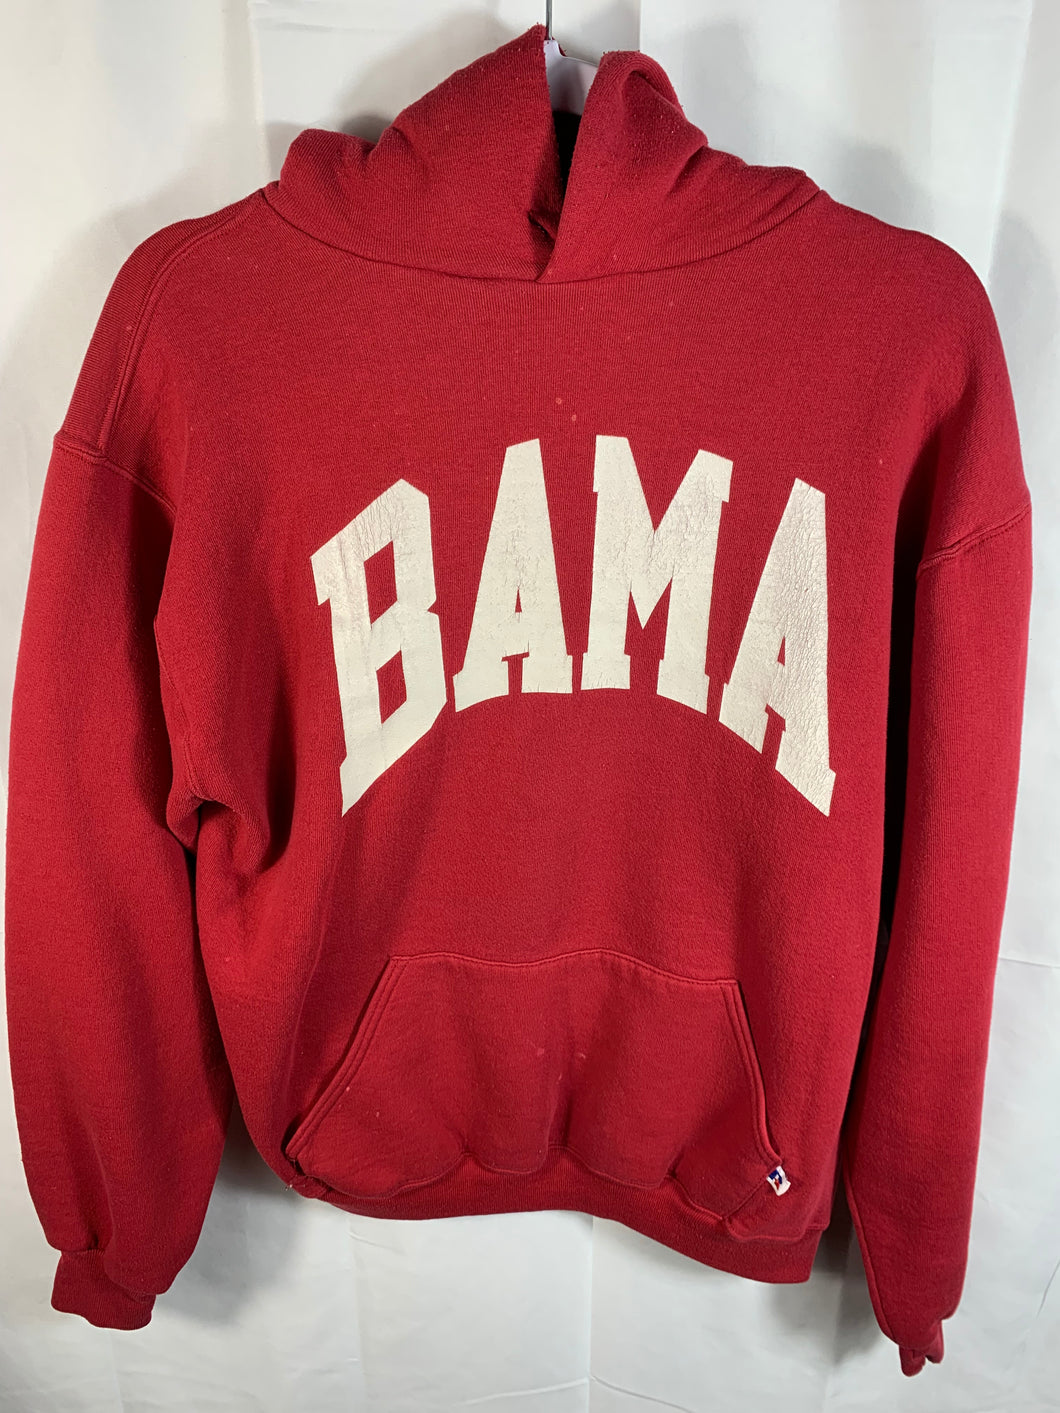 Vintage Bama Spellout Hoodie Sweatshirt Medium